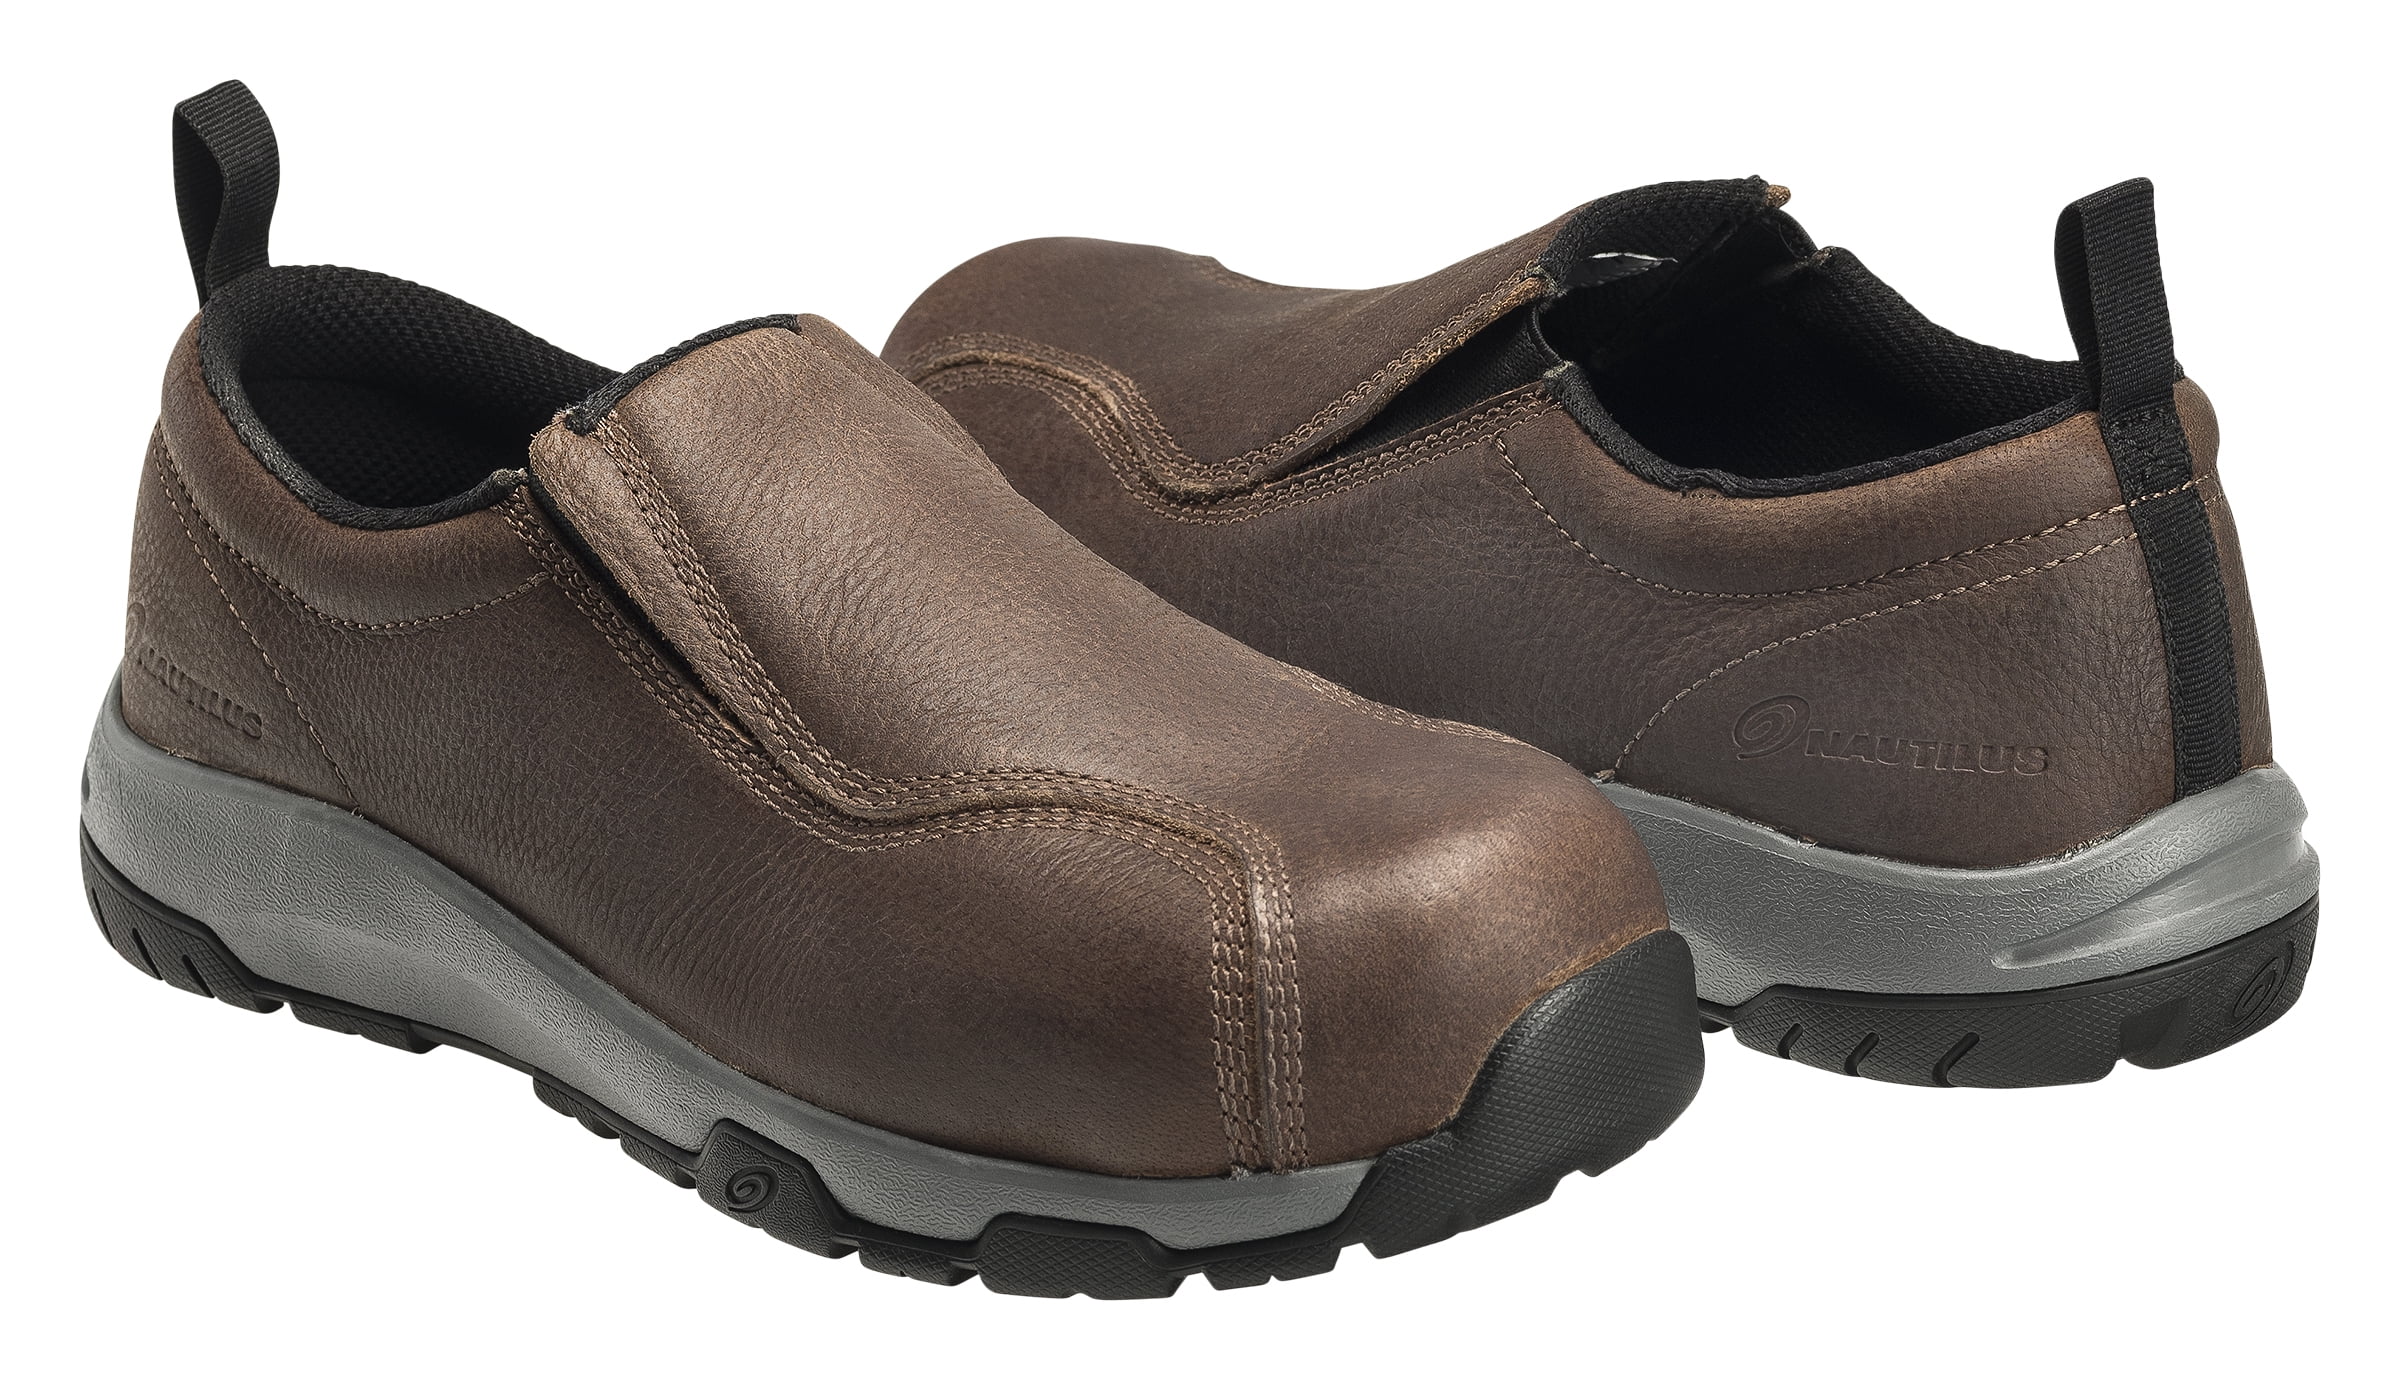 carbon toe work shoes